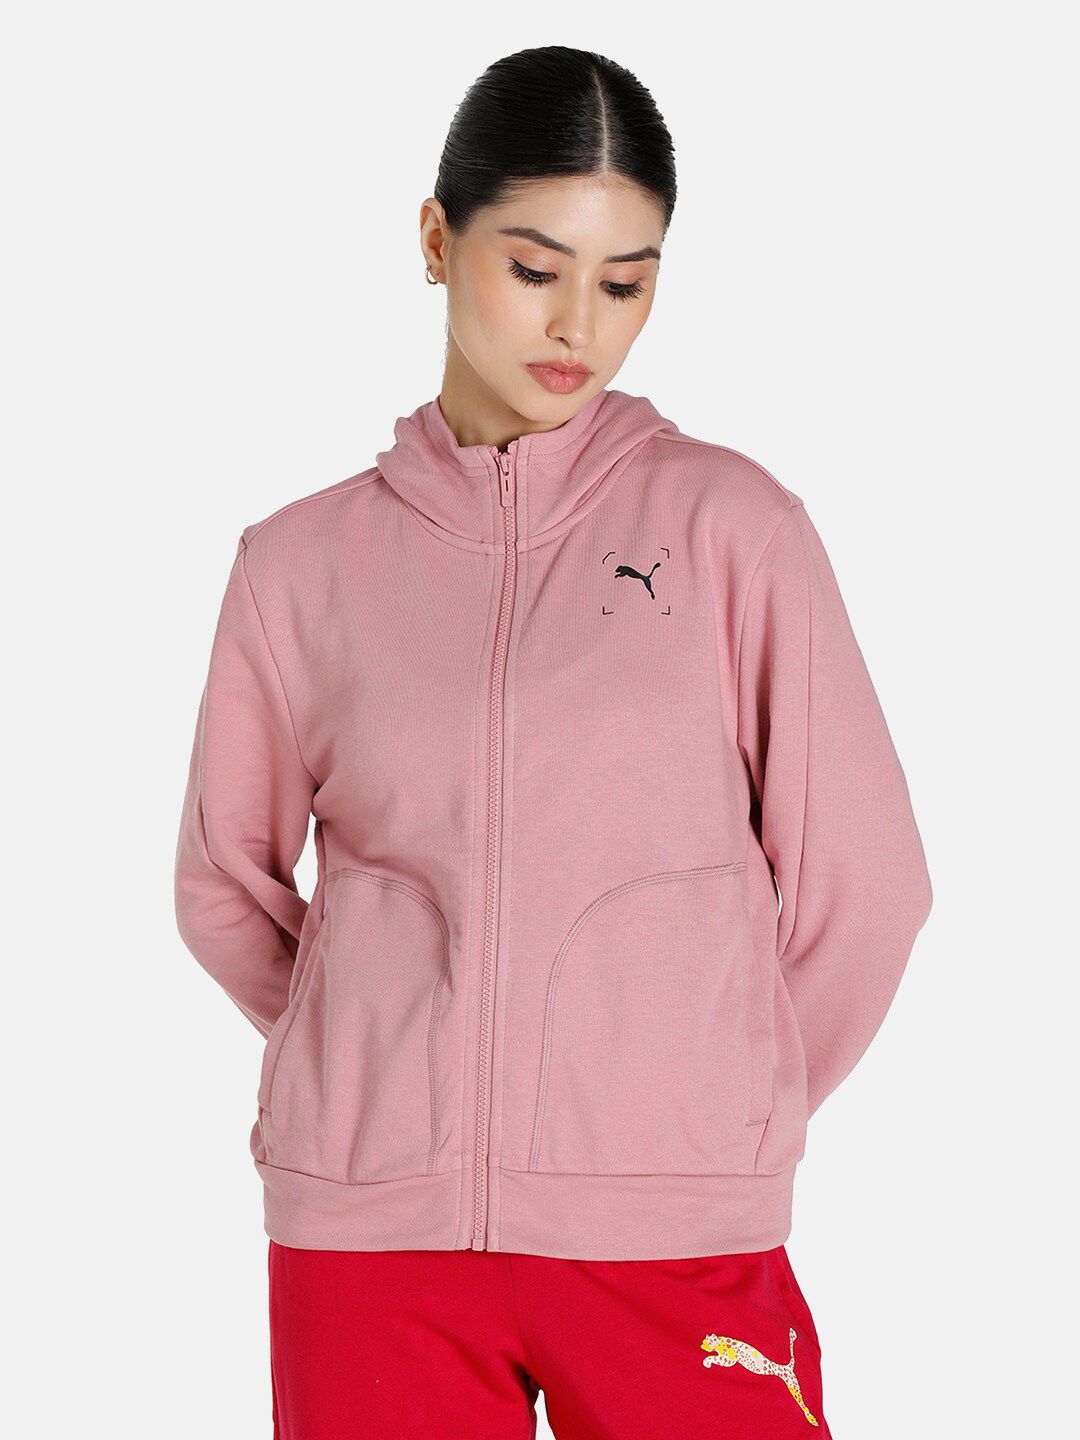 Puma Women Rose Hooded Sweatshirt Price in India